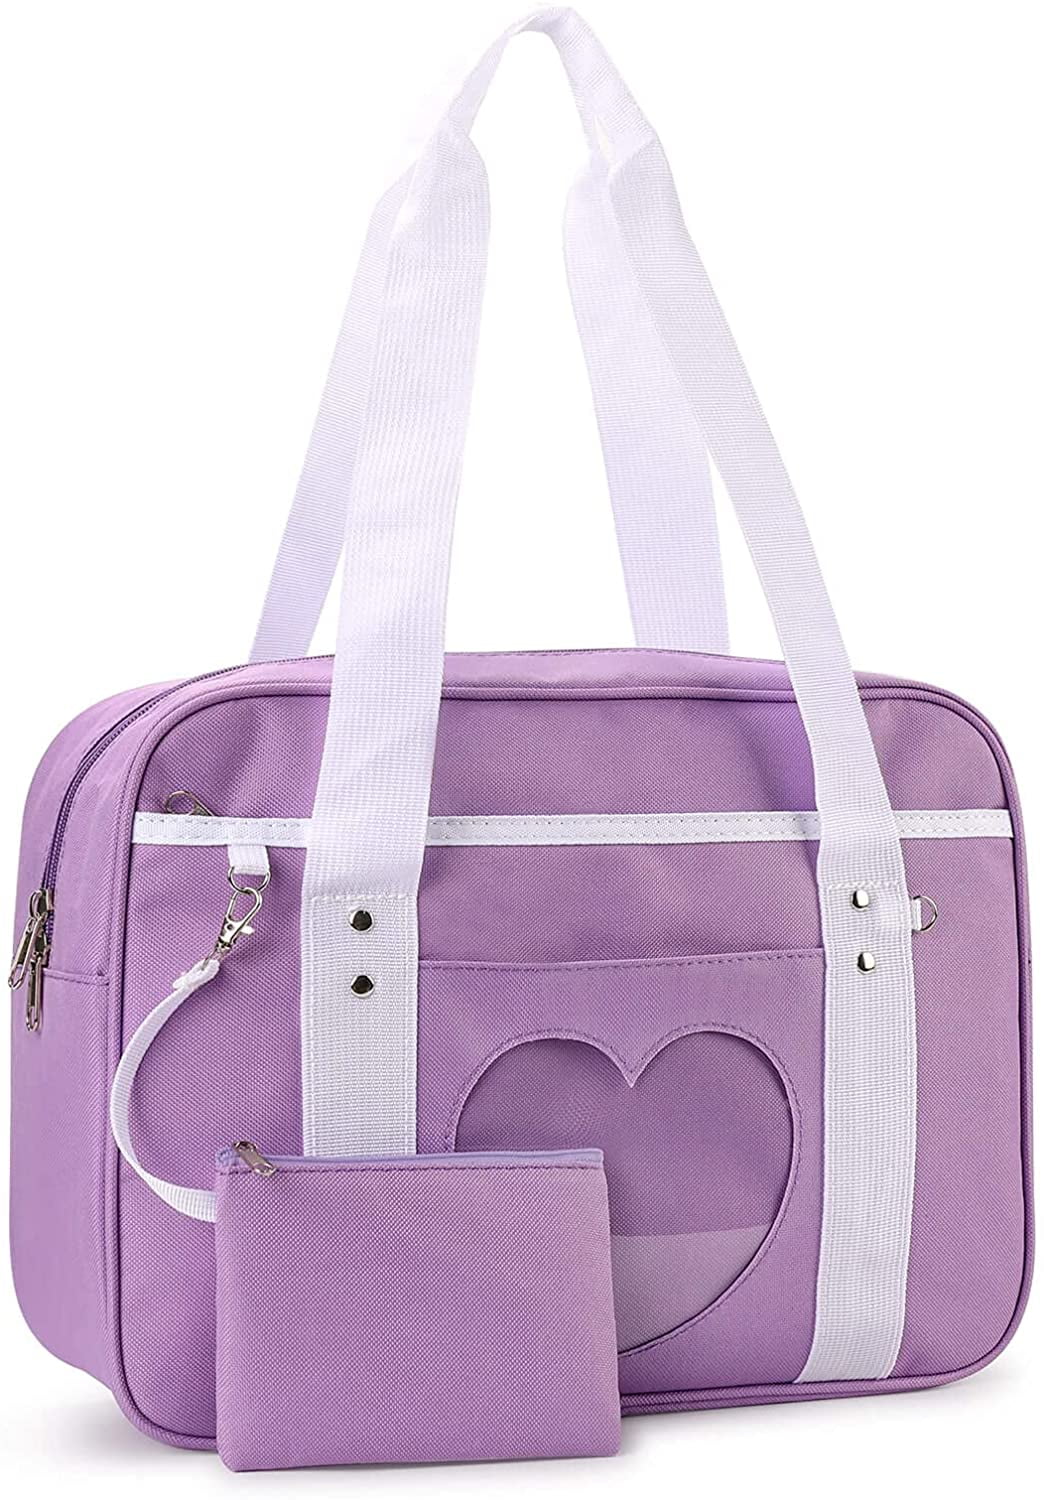 Ita Bag Heart Japanese School Handbag Large JK Bag Girls Purse Anime Satchels Beige 